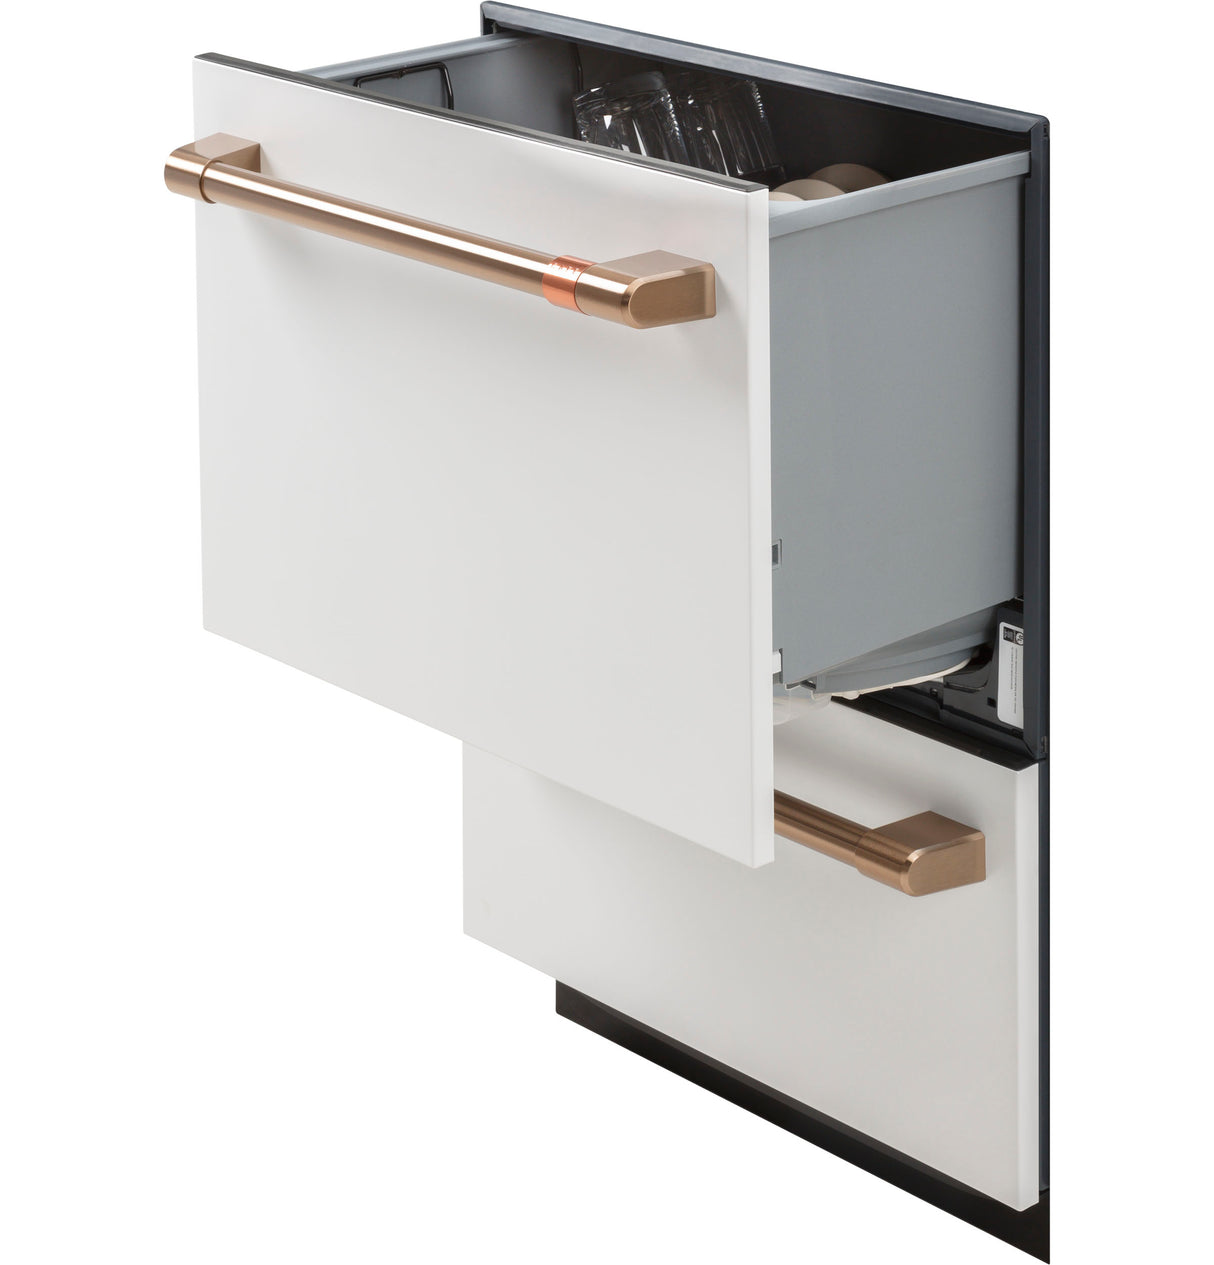 Caf(eback)(TM) Dishwasher Double Drawer - (CDD420P4TW2)